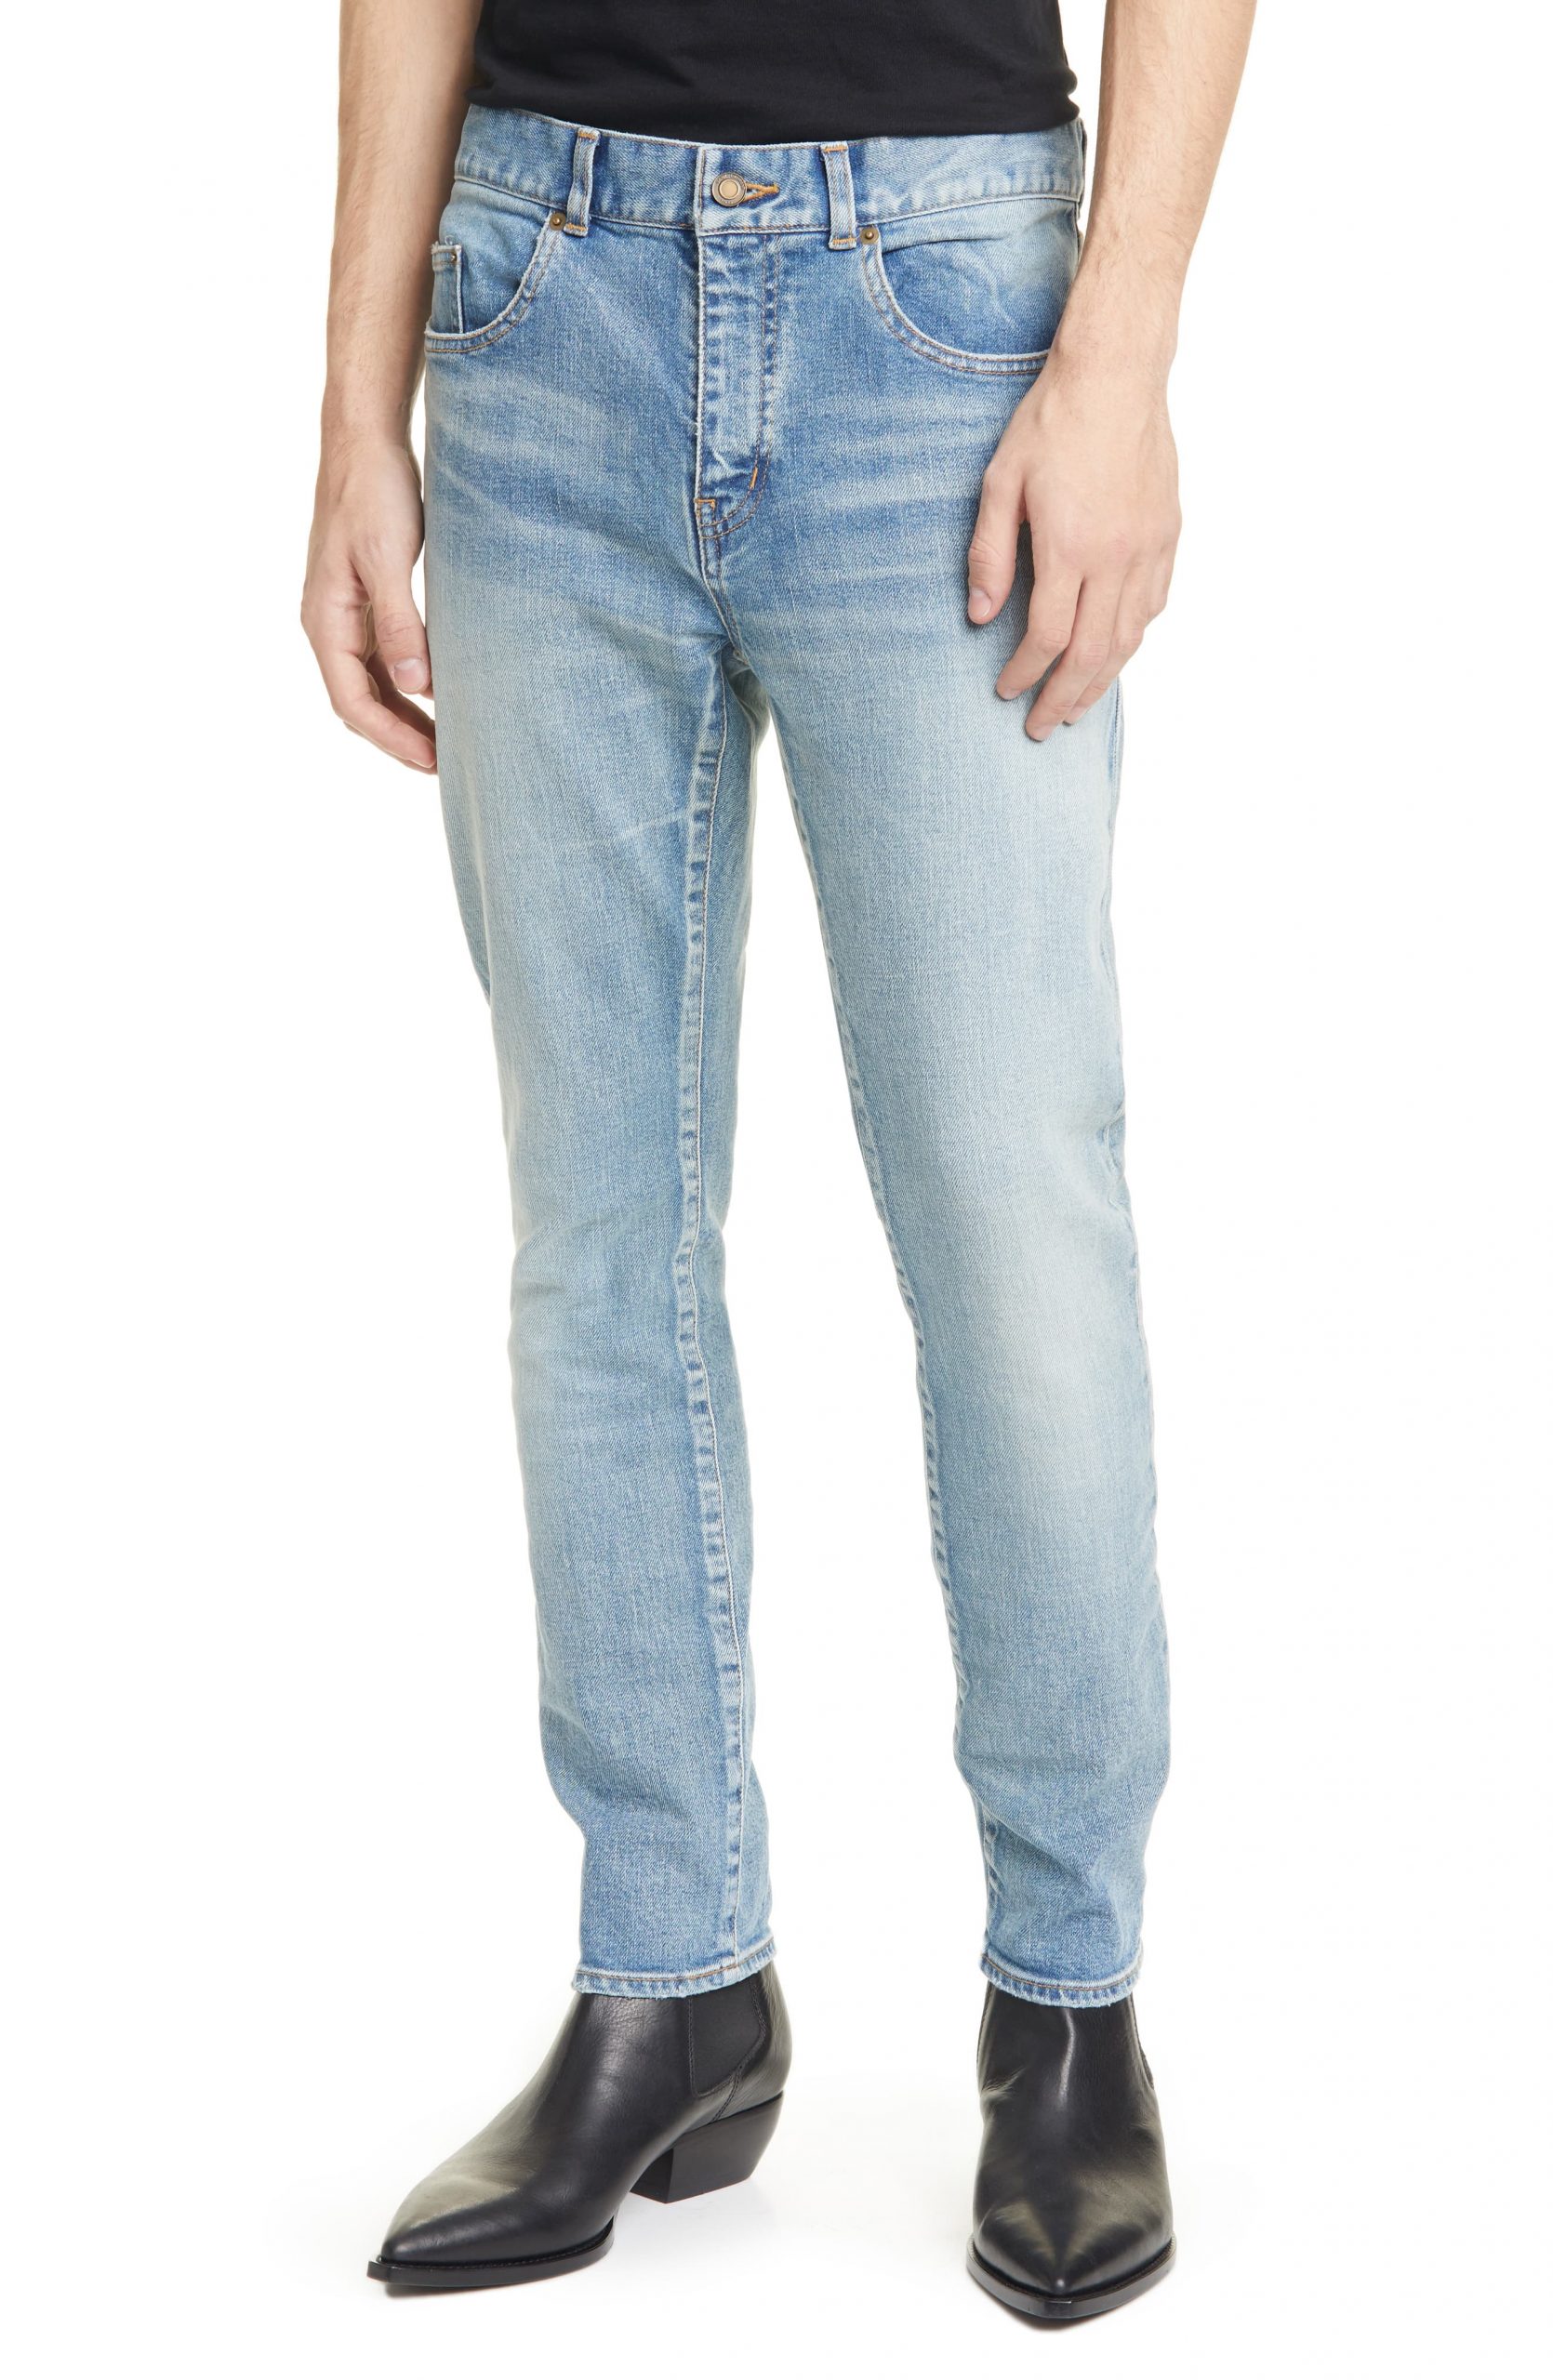 size 30 skinny jeans